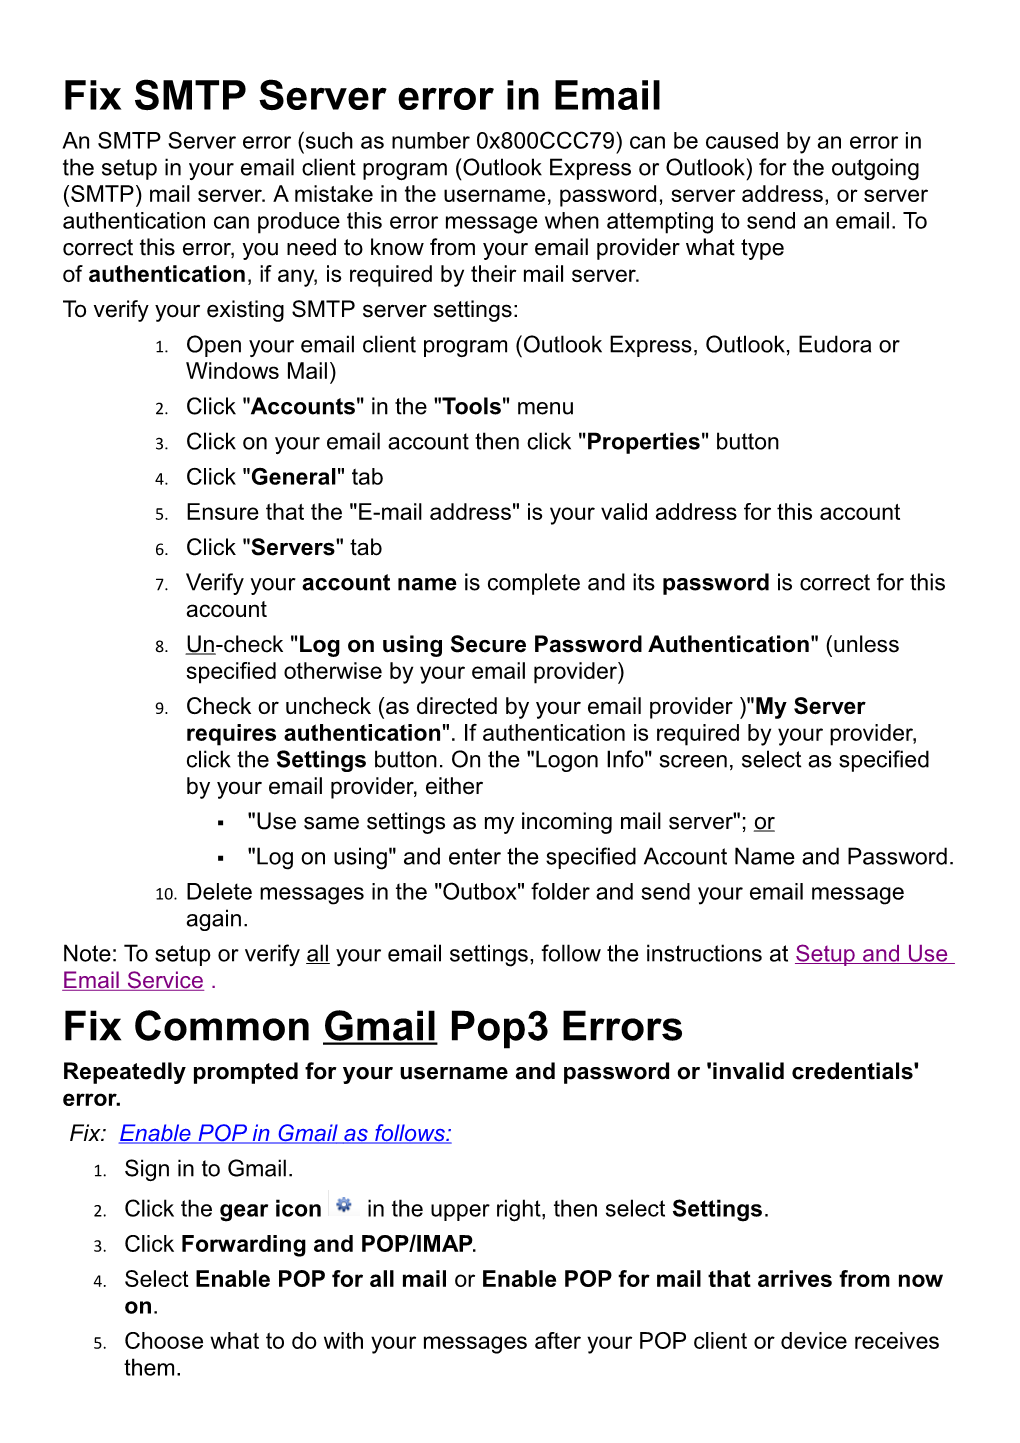 Fix SMTP Server Error in Email